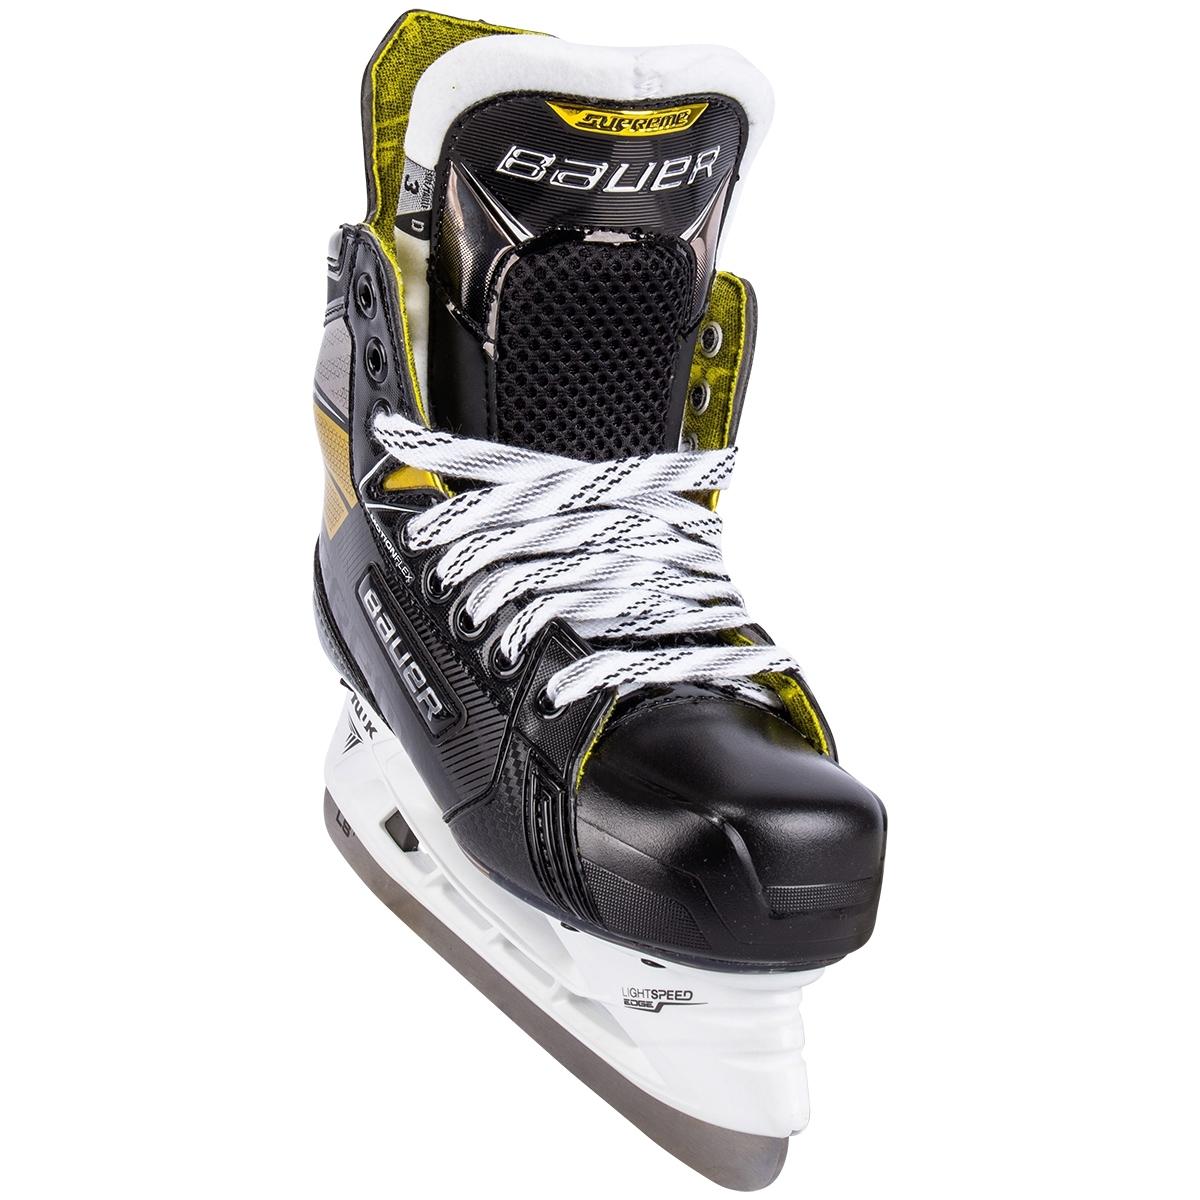 Bauer Supreme 3S Jr. Hockey Skatesproduct zoom image #2